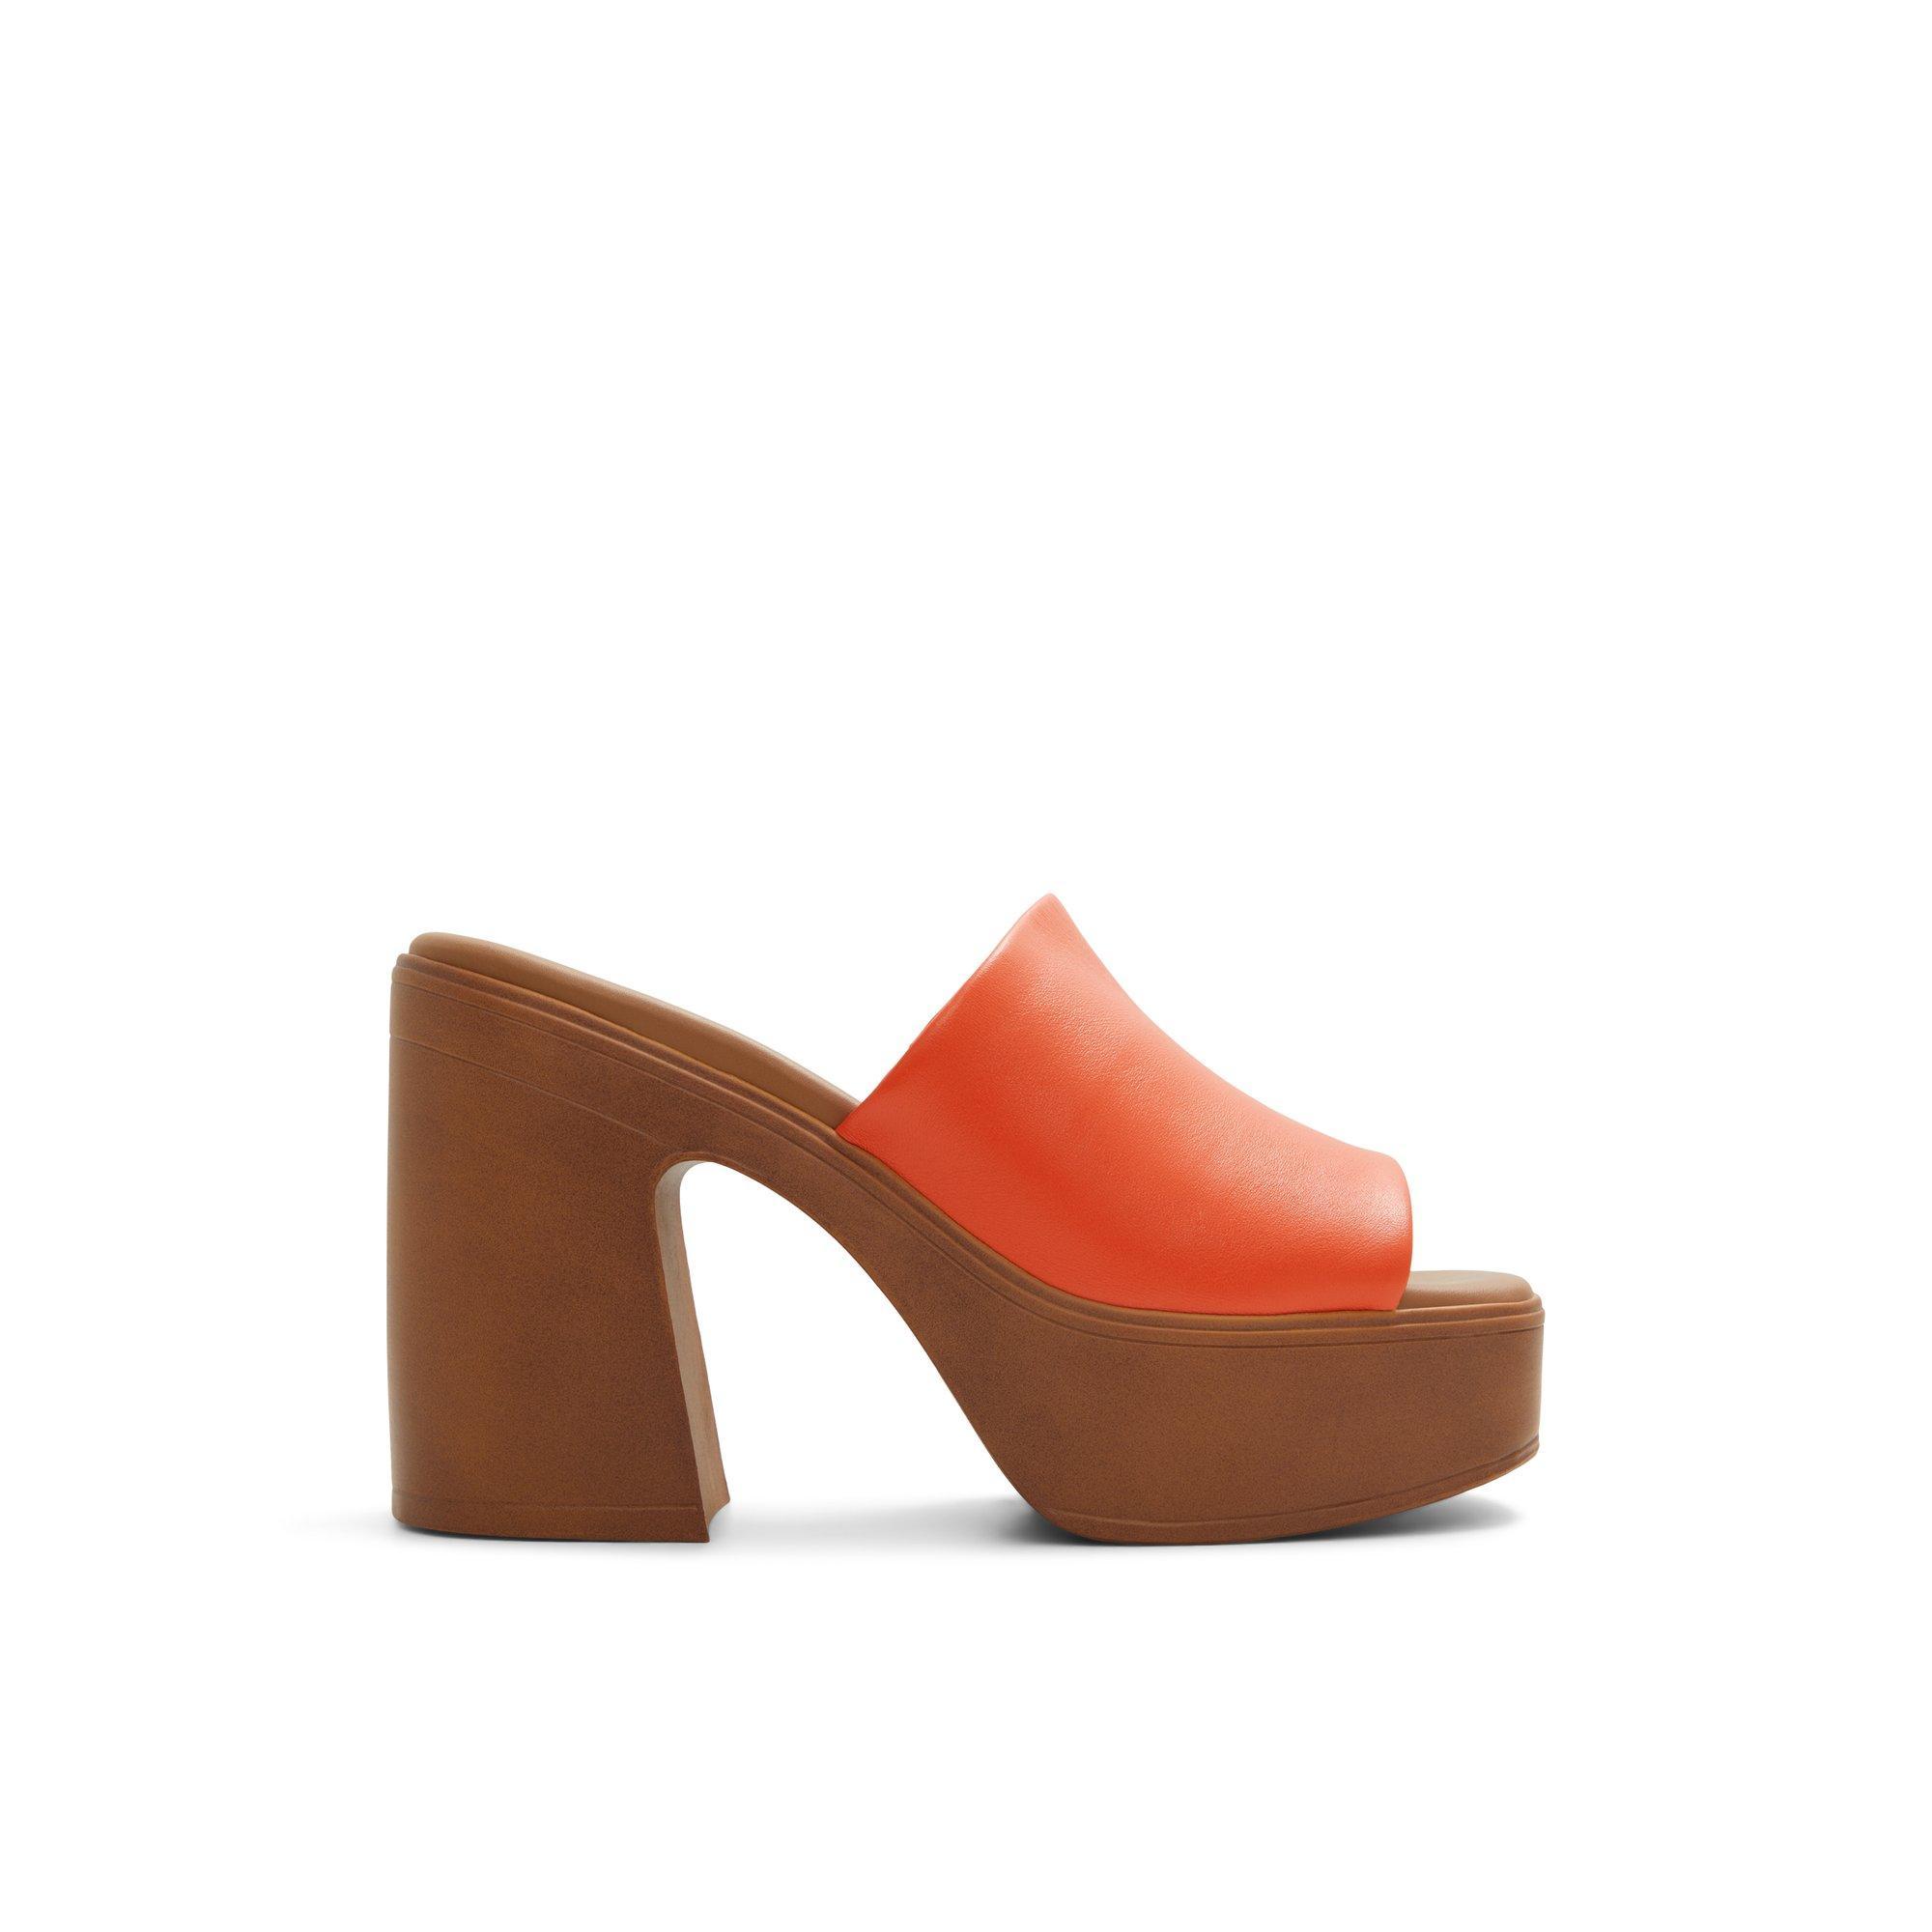 ALDO Maysee Platform Sandal Product Image